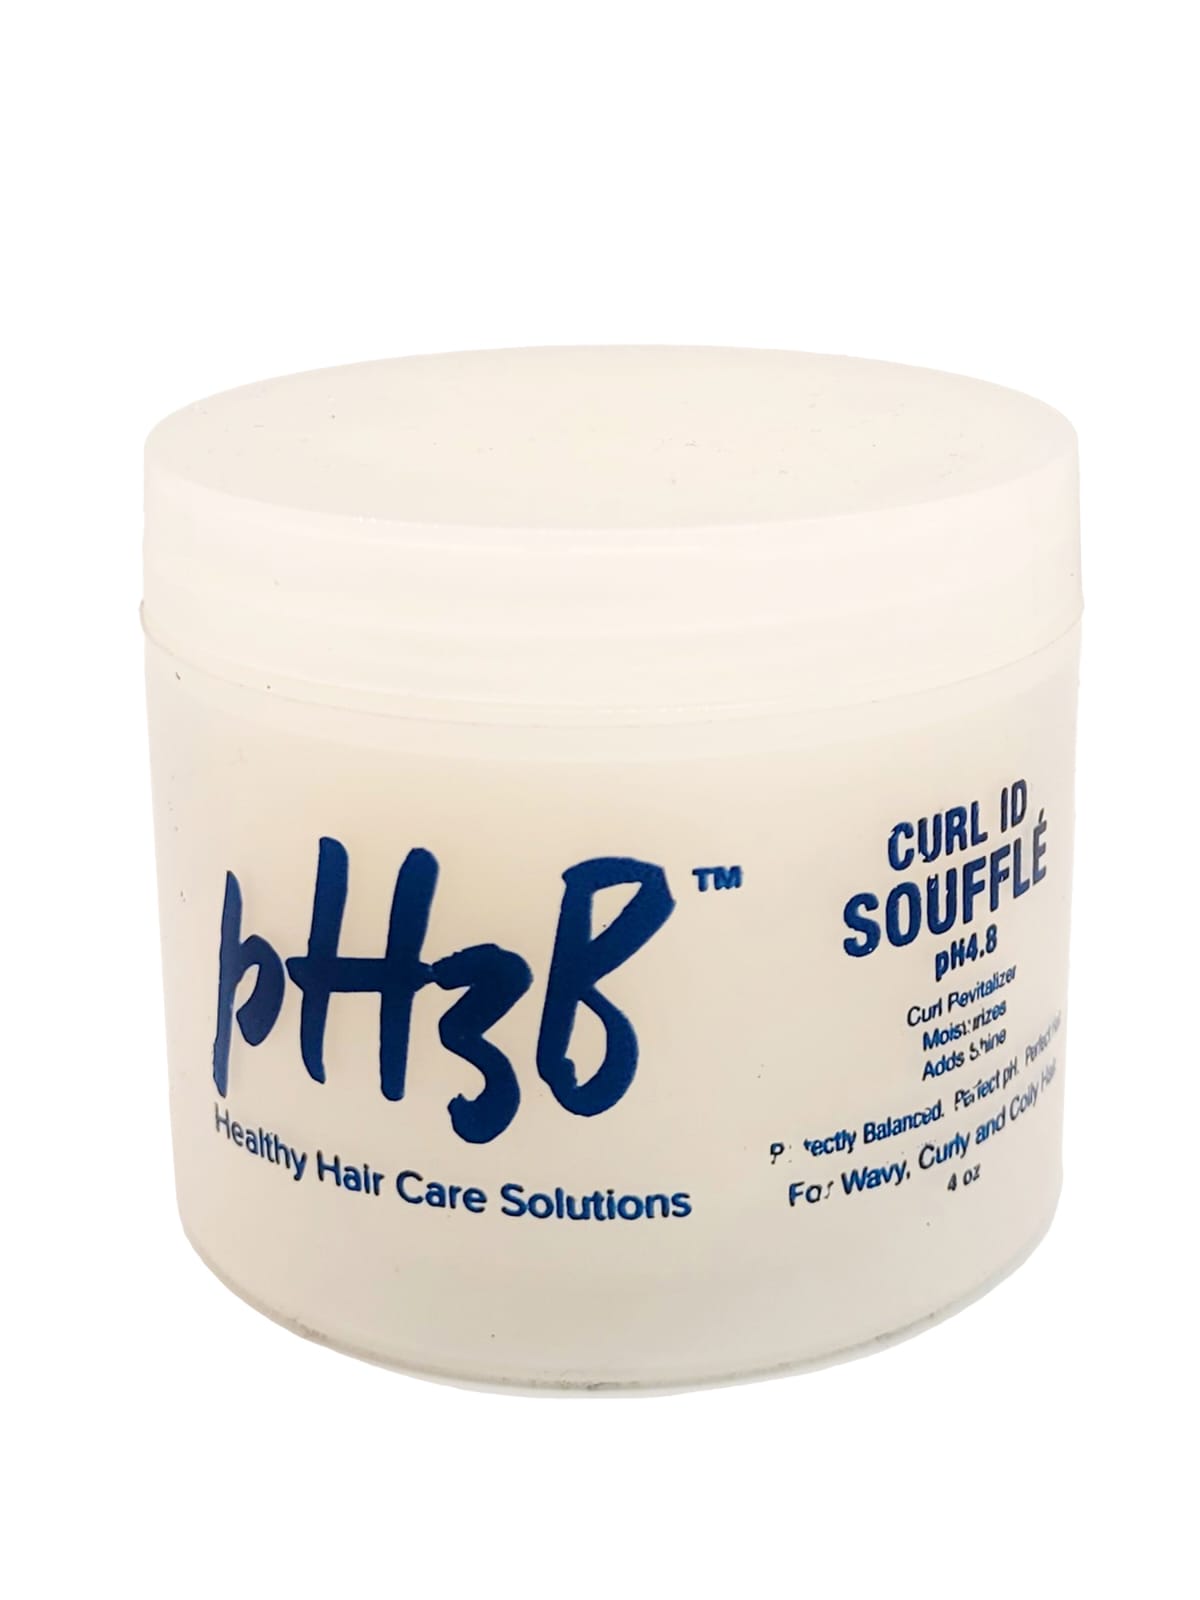 pH3B Curl ID Souffle (Pro Stylist Only)